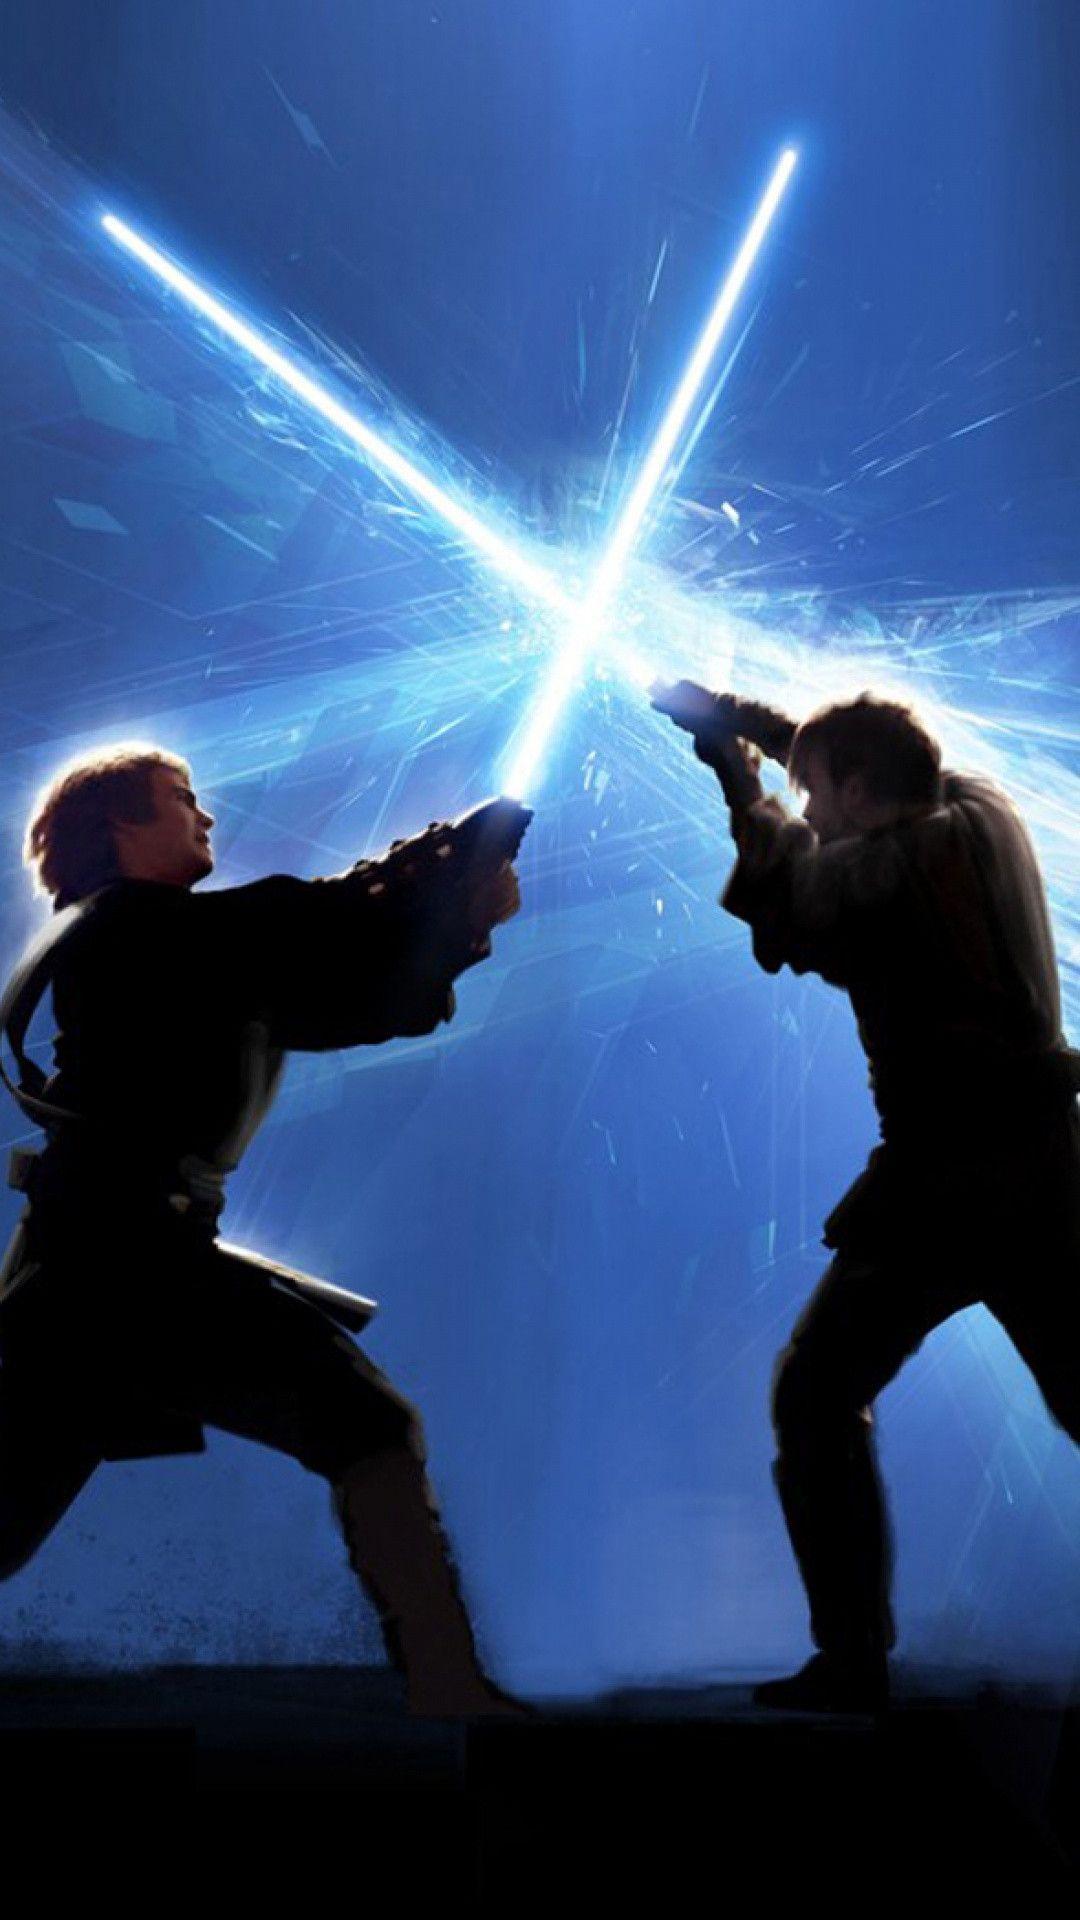 Anakin Vs Obi Wan: Battle Of The Heroes Wars Episode III